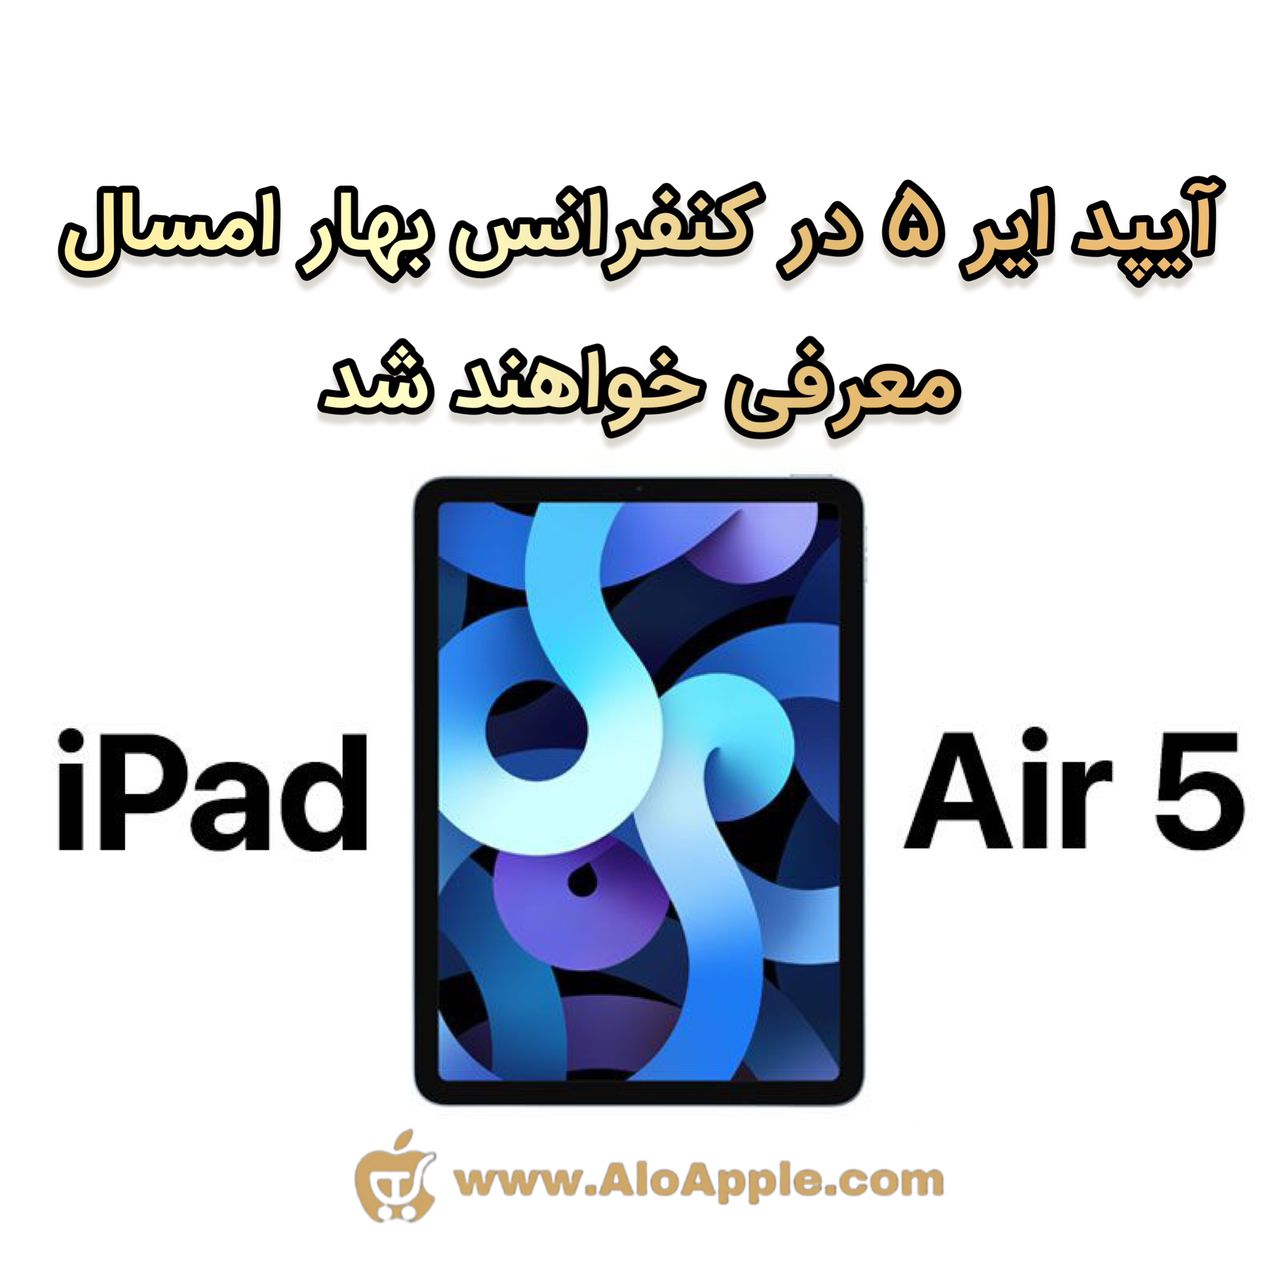 iPad Air 5 اپل  در رویداد بهار امسال معرفی خواهد شد